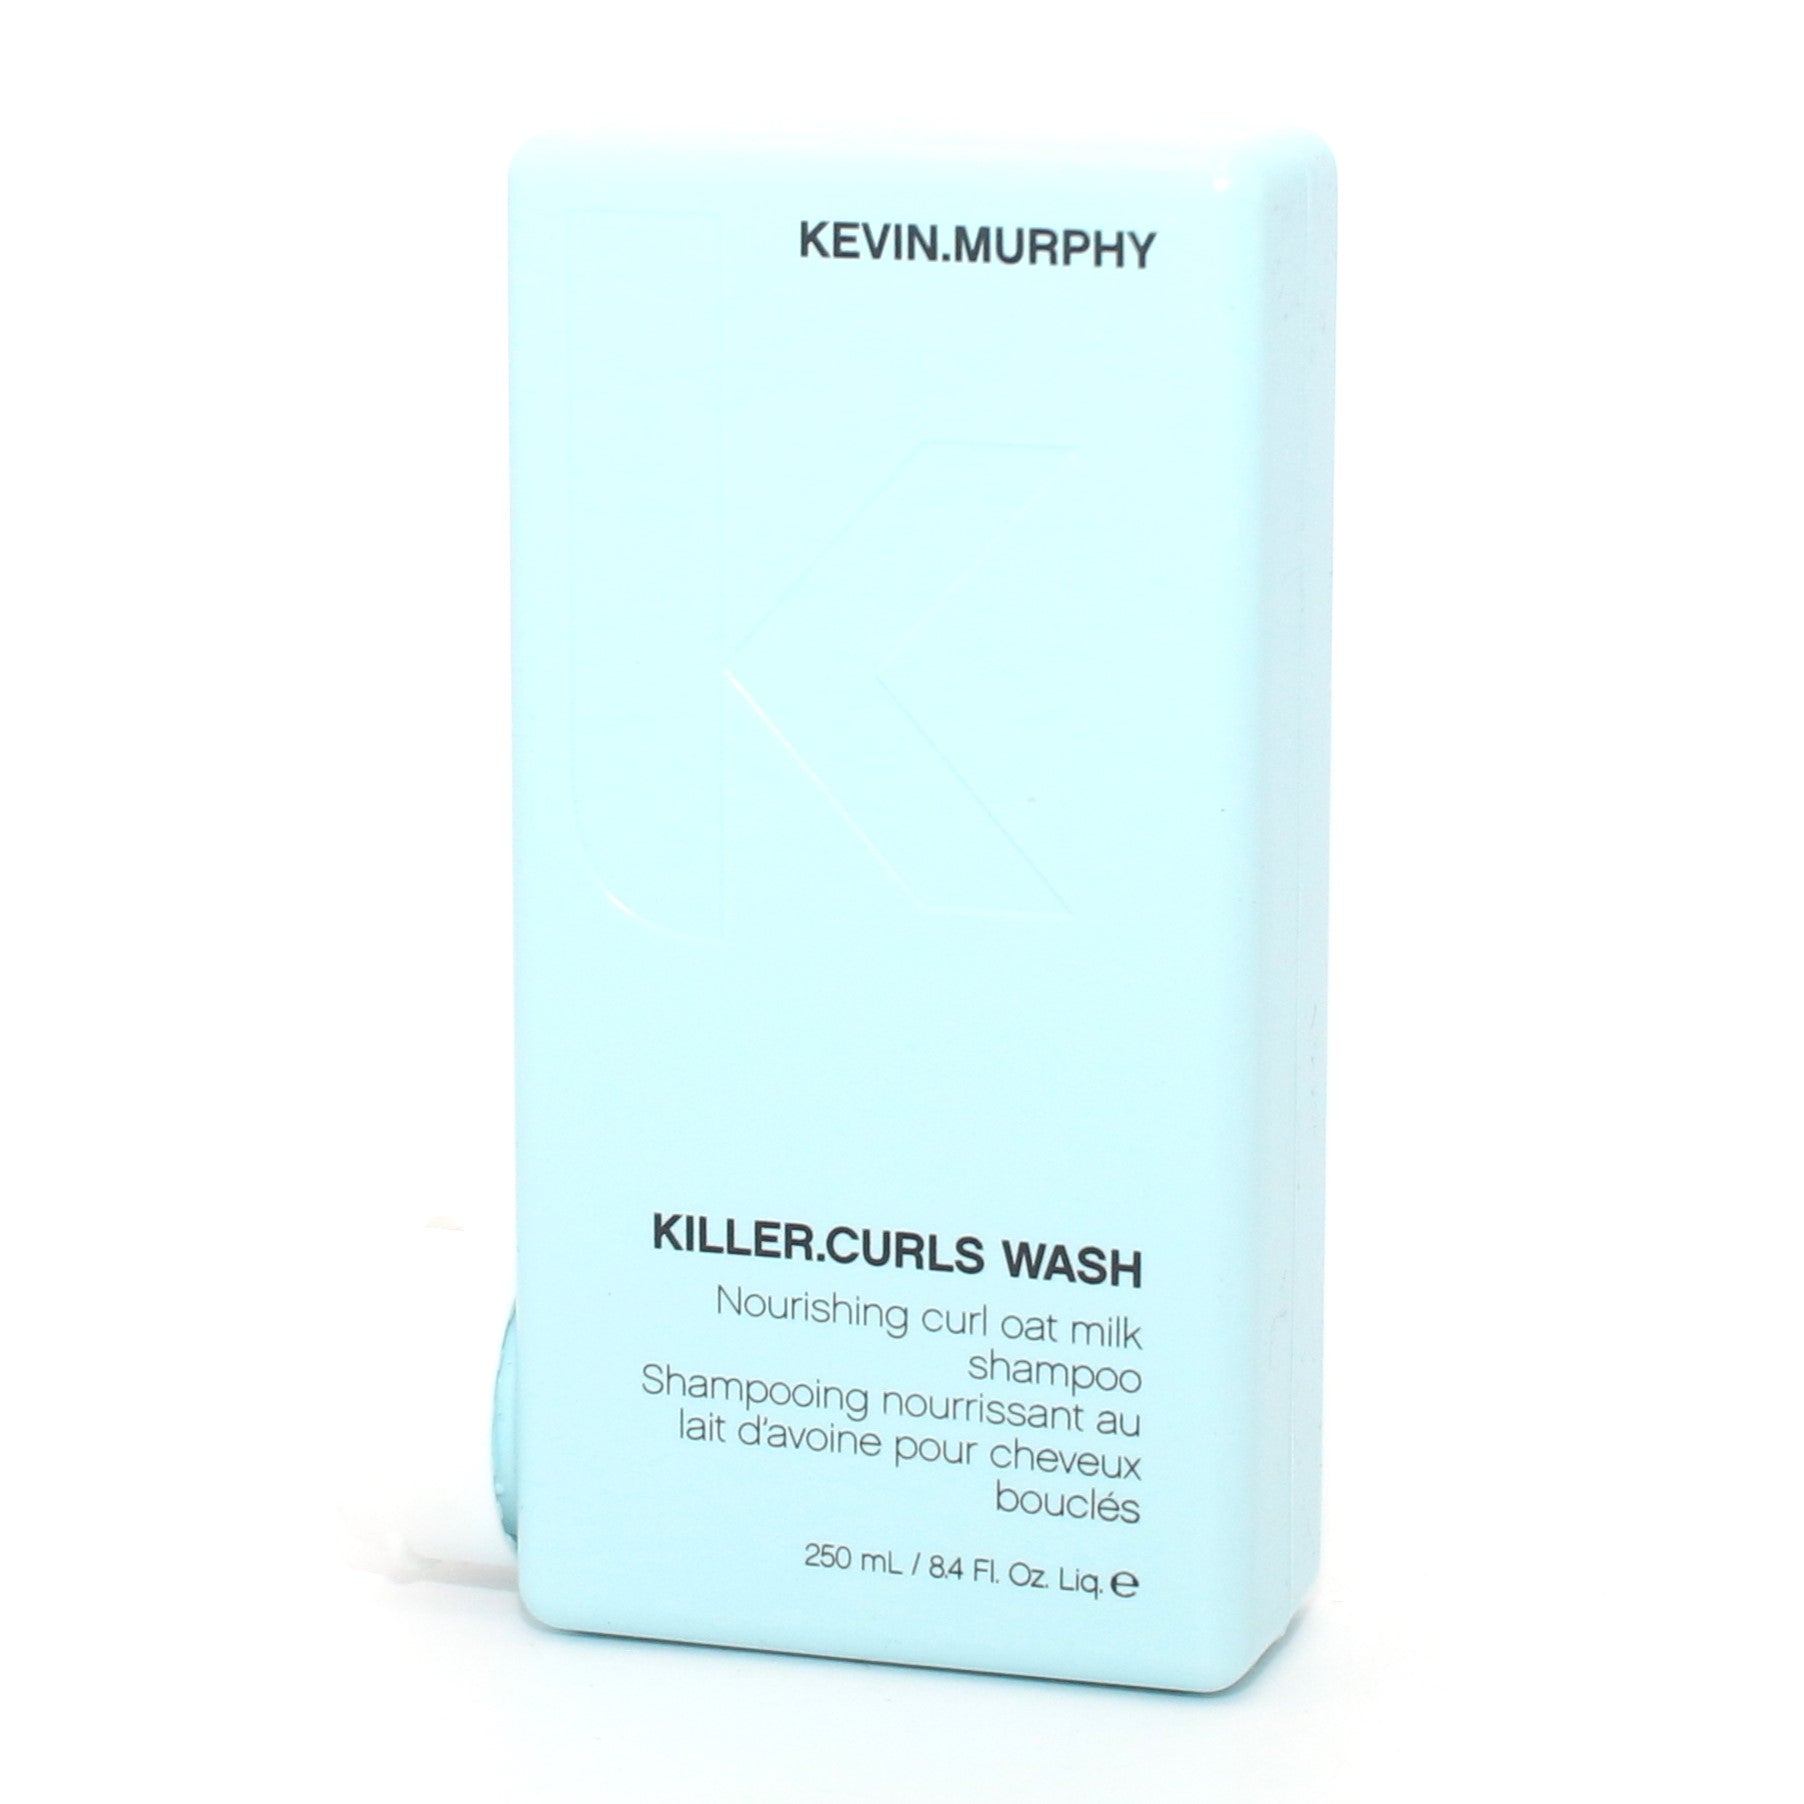 Kevin Murphy Killer Curls Wash Nourishing Curl Oat Milk Shampoo 8.4 oz